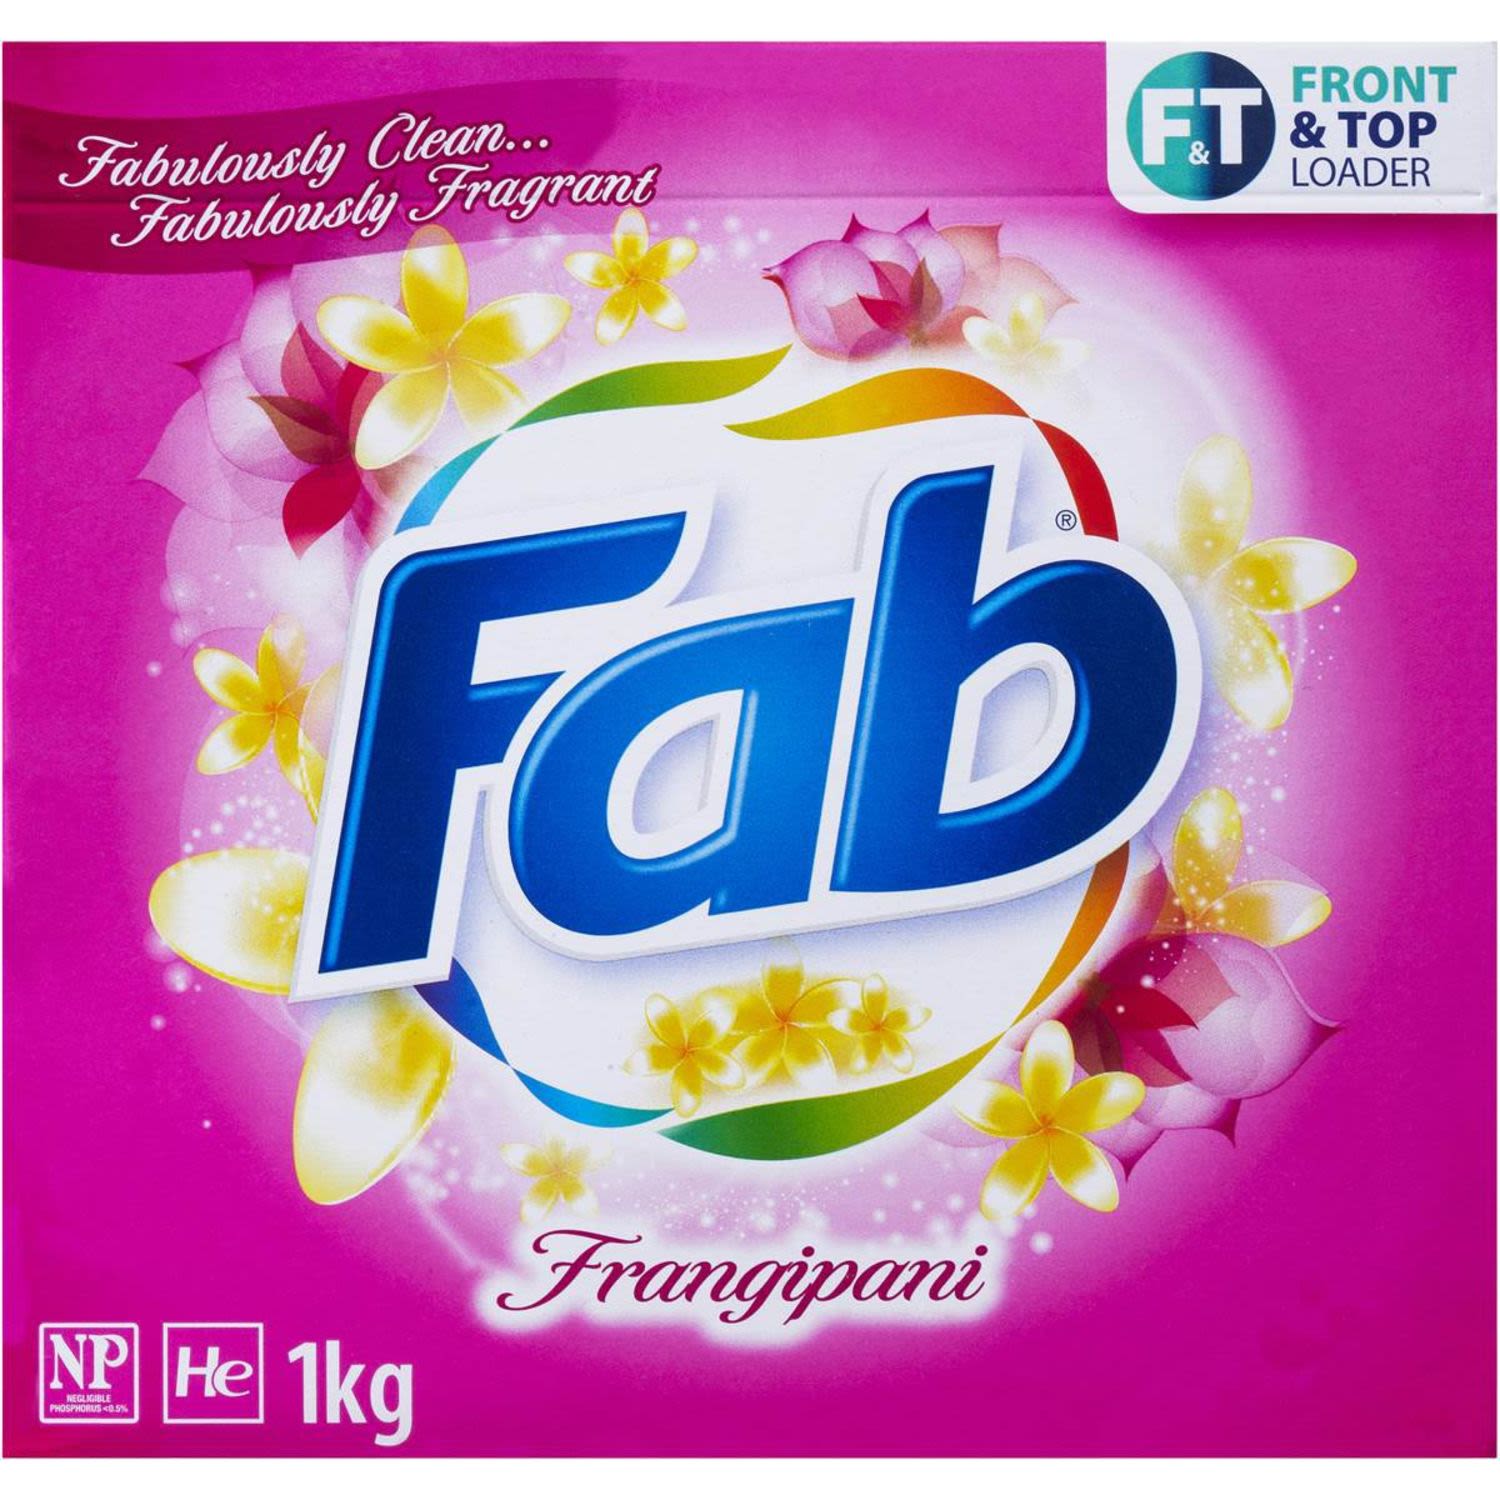 Fab Fresh Frangipani Laundry Detergent Powder, 1 Kilogram